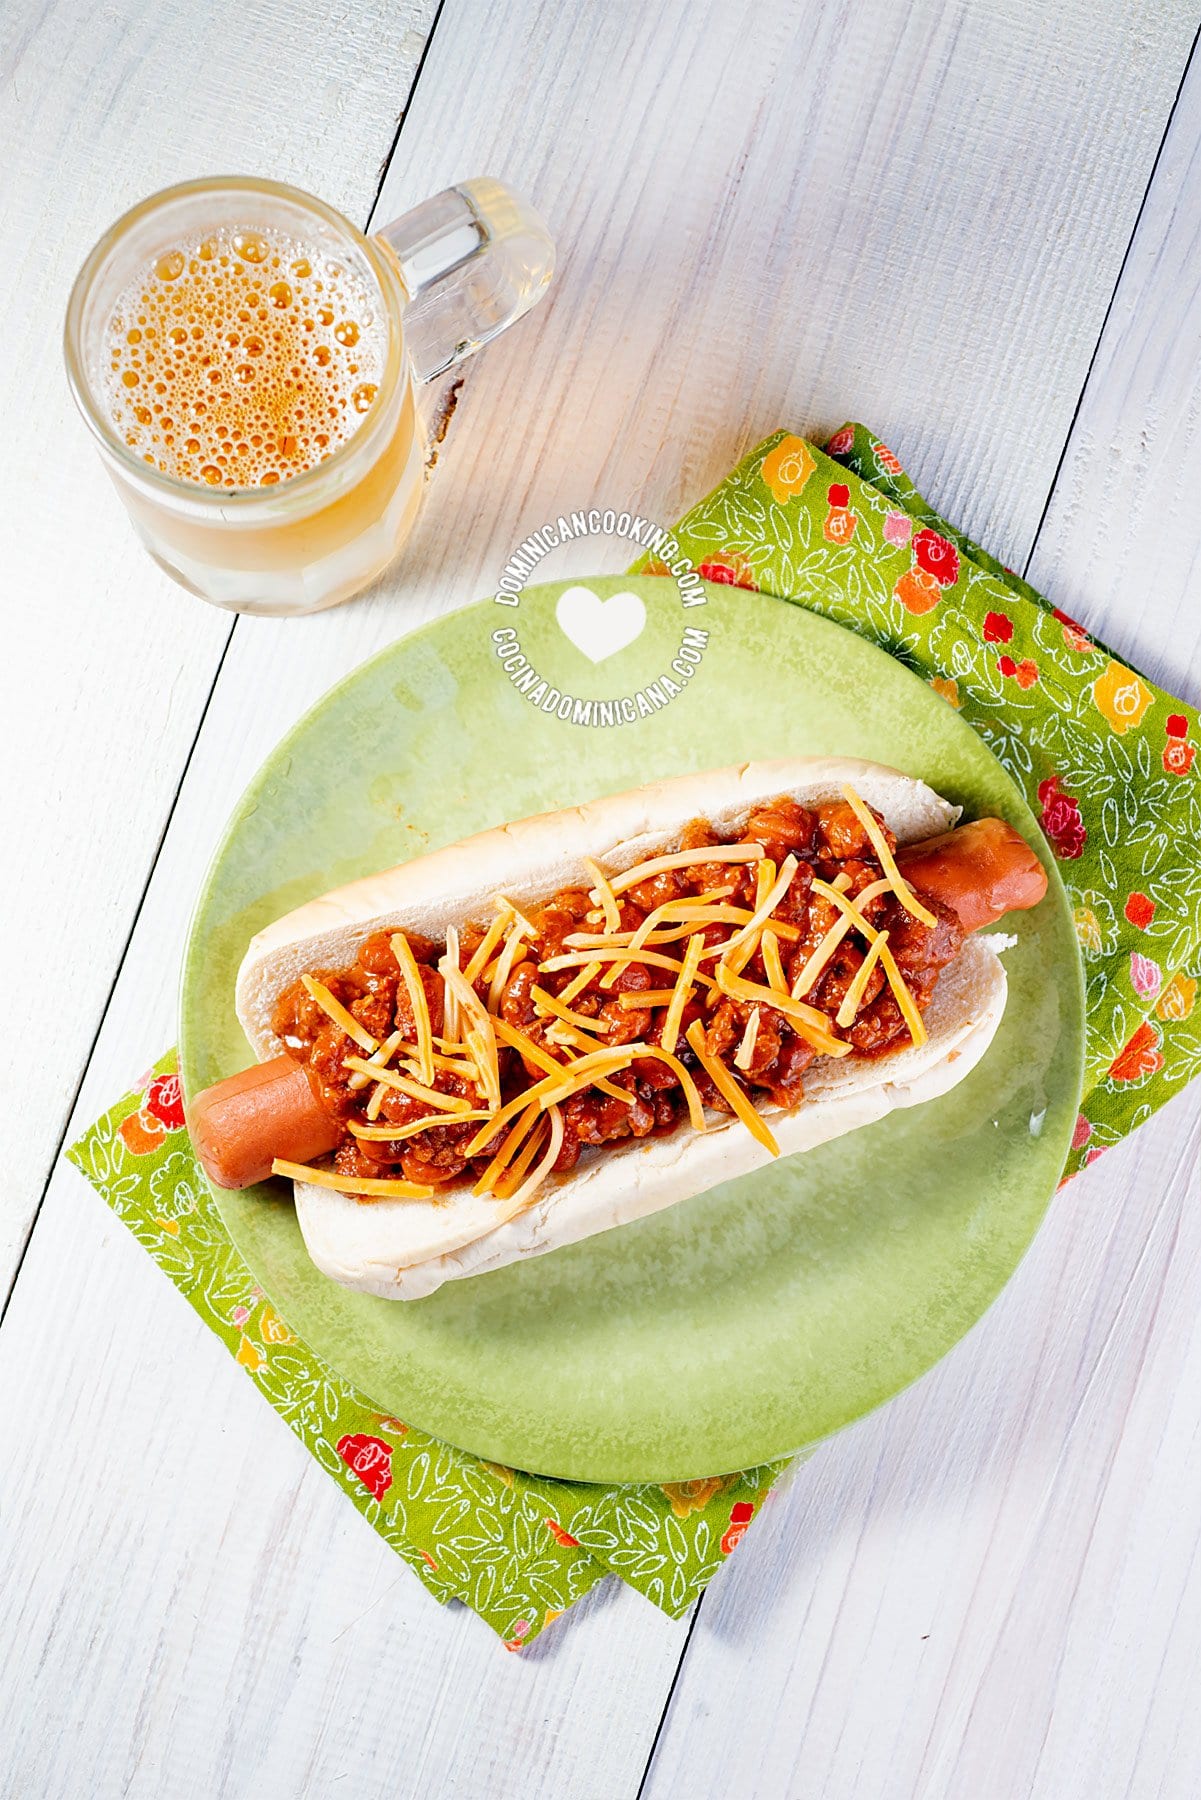 Chili hot dog mexicano.